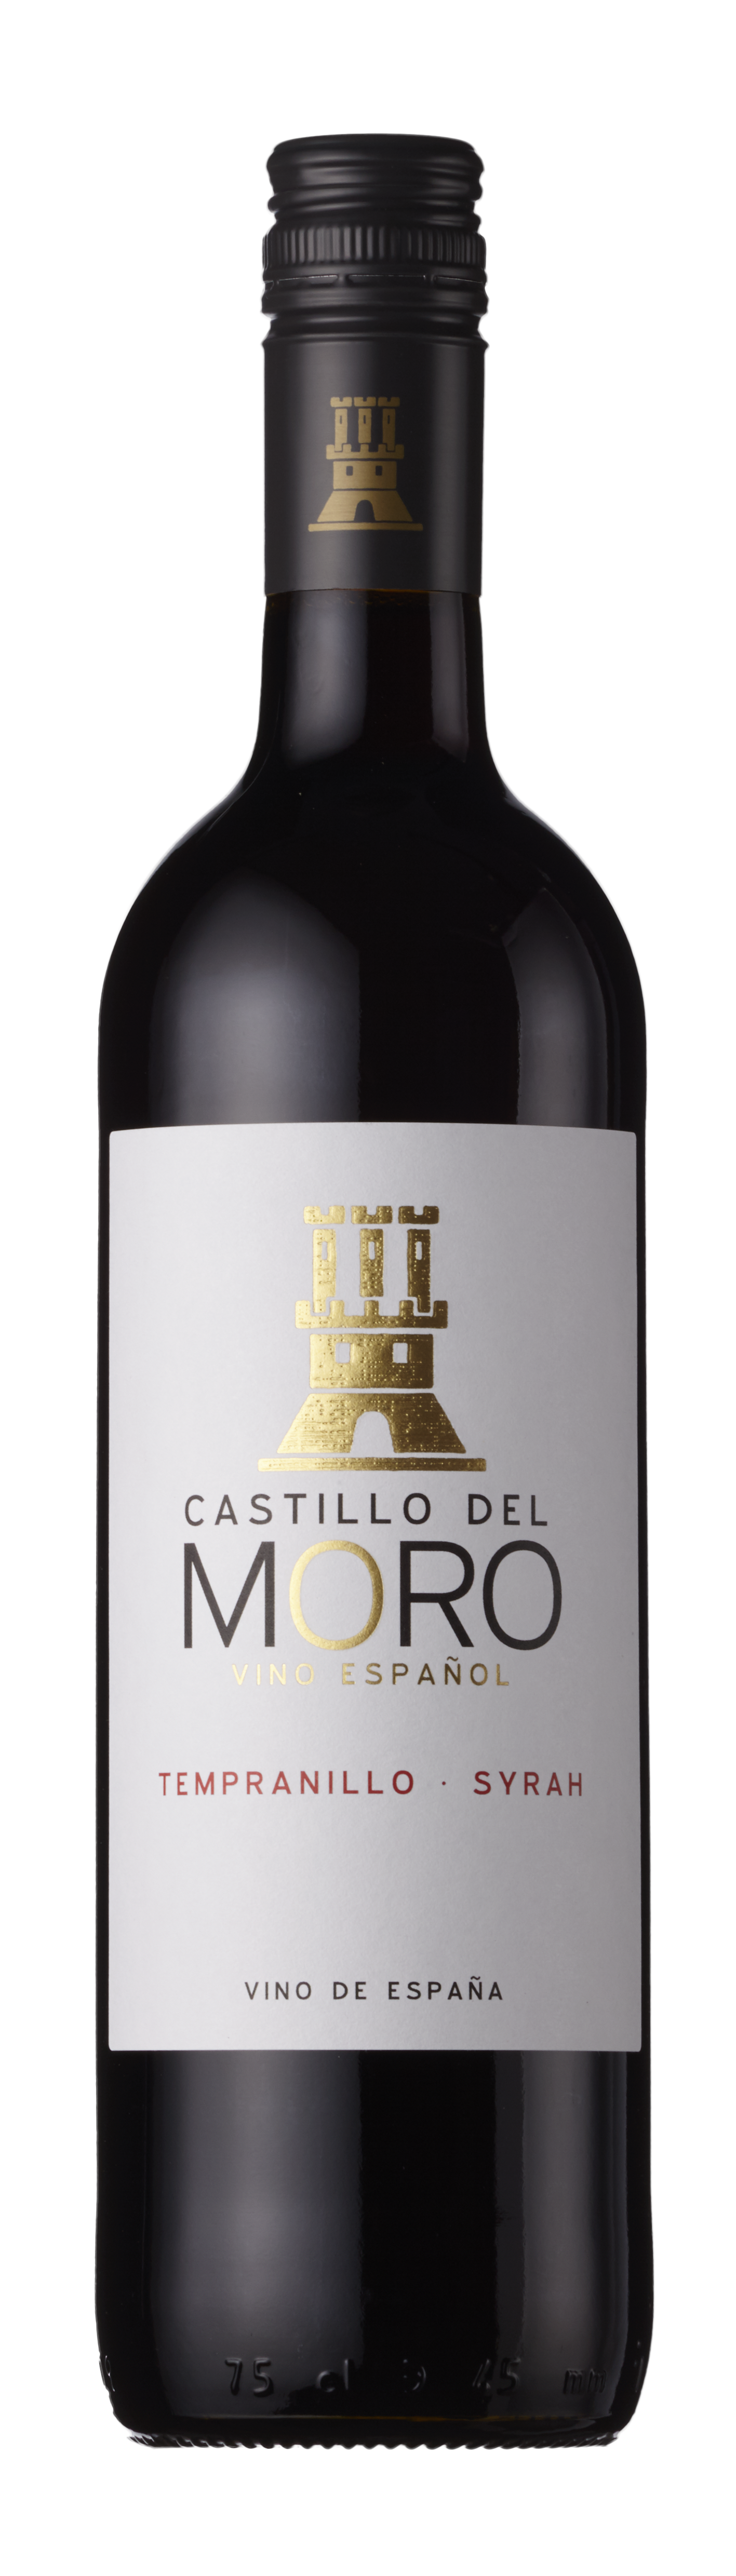 Bottle shot - Castillo del Moro, Tempranillo, Syrah, Vino de España, Spain